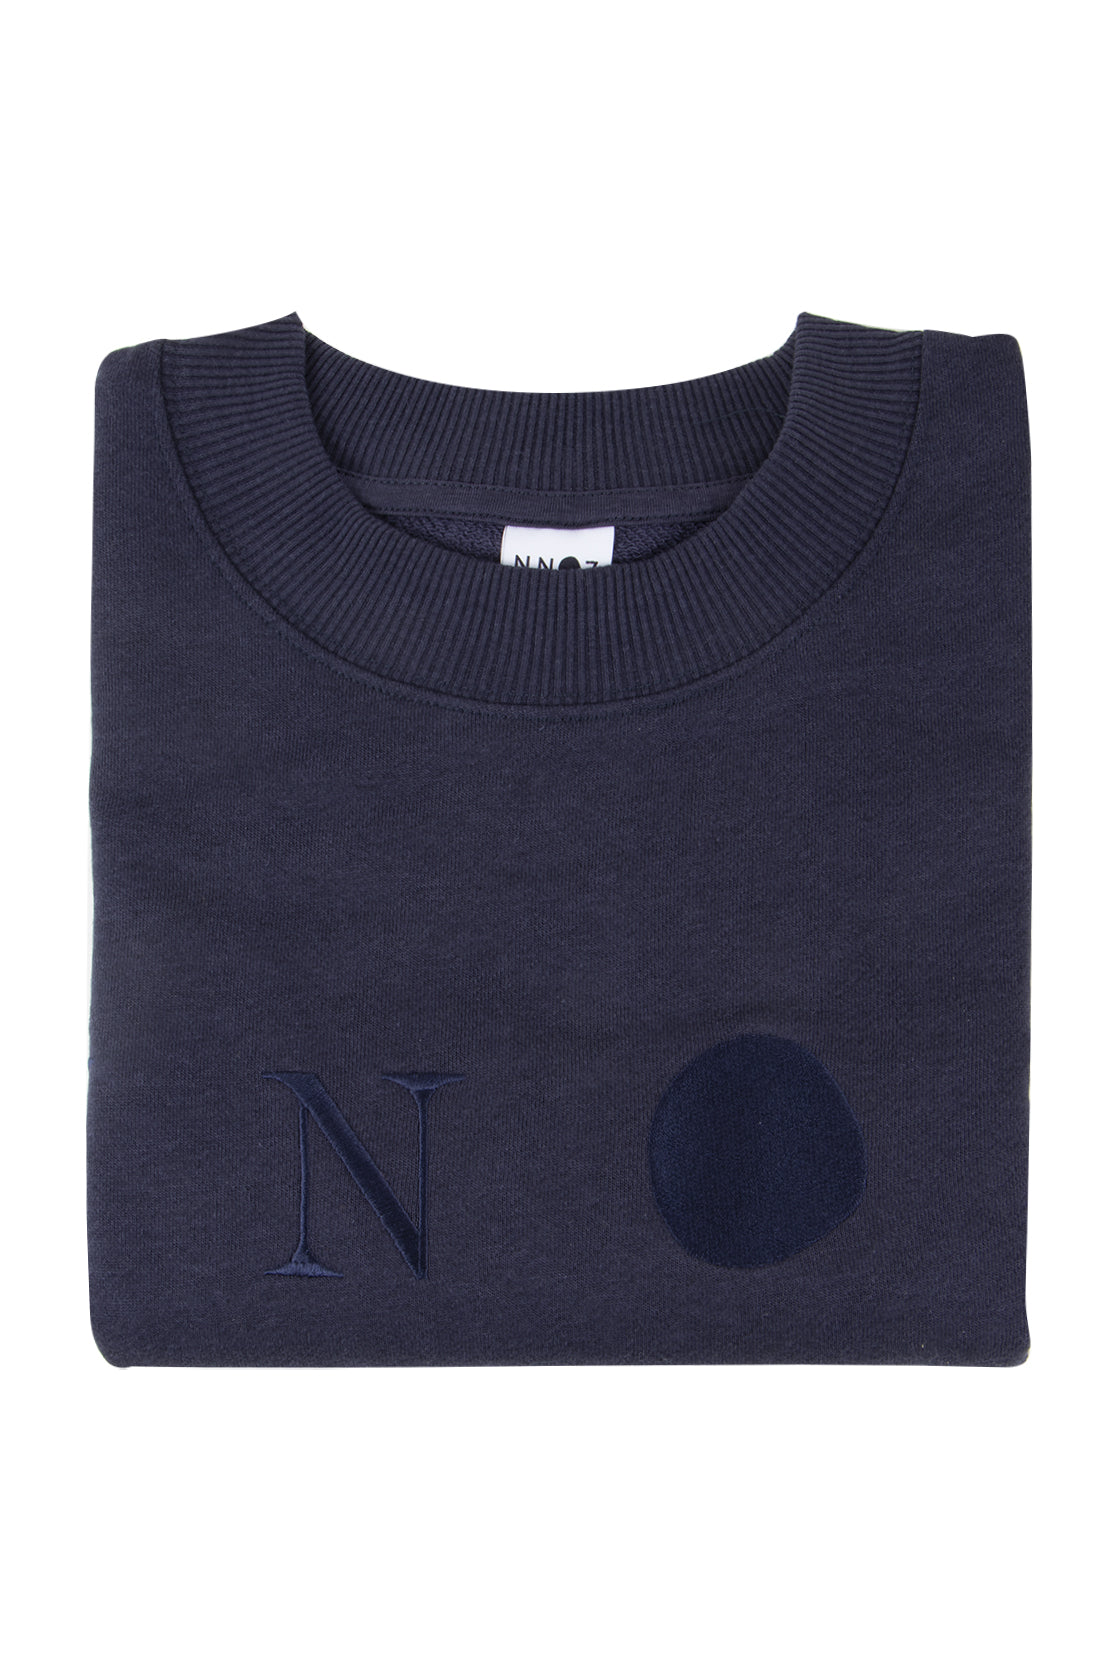 NN07 Jerome Crew Neck Sweater Navy